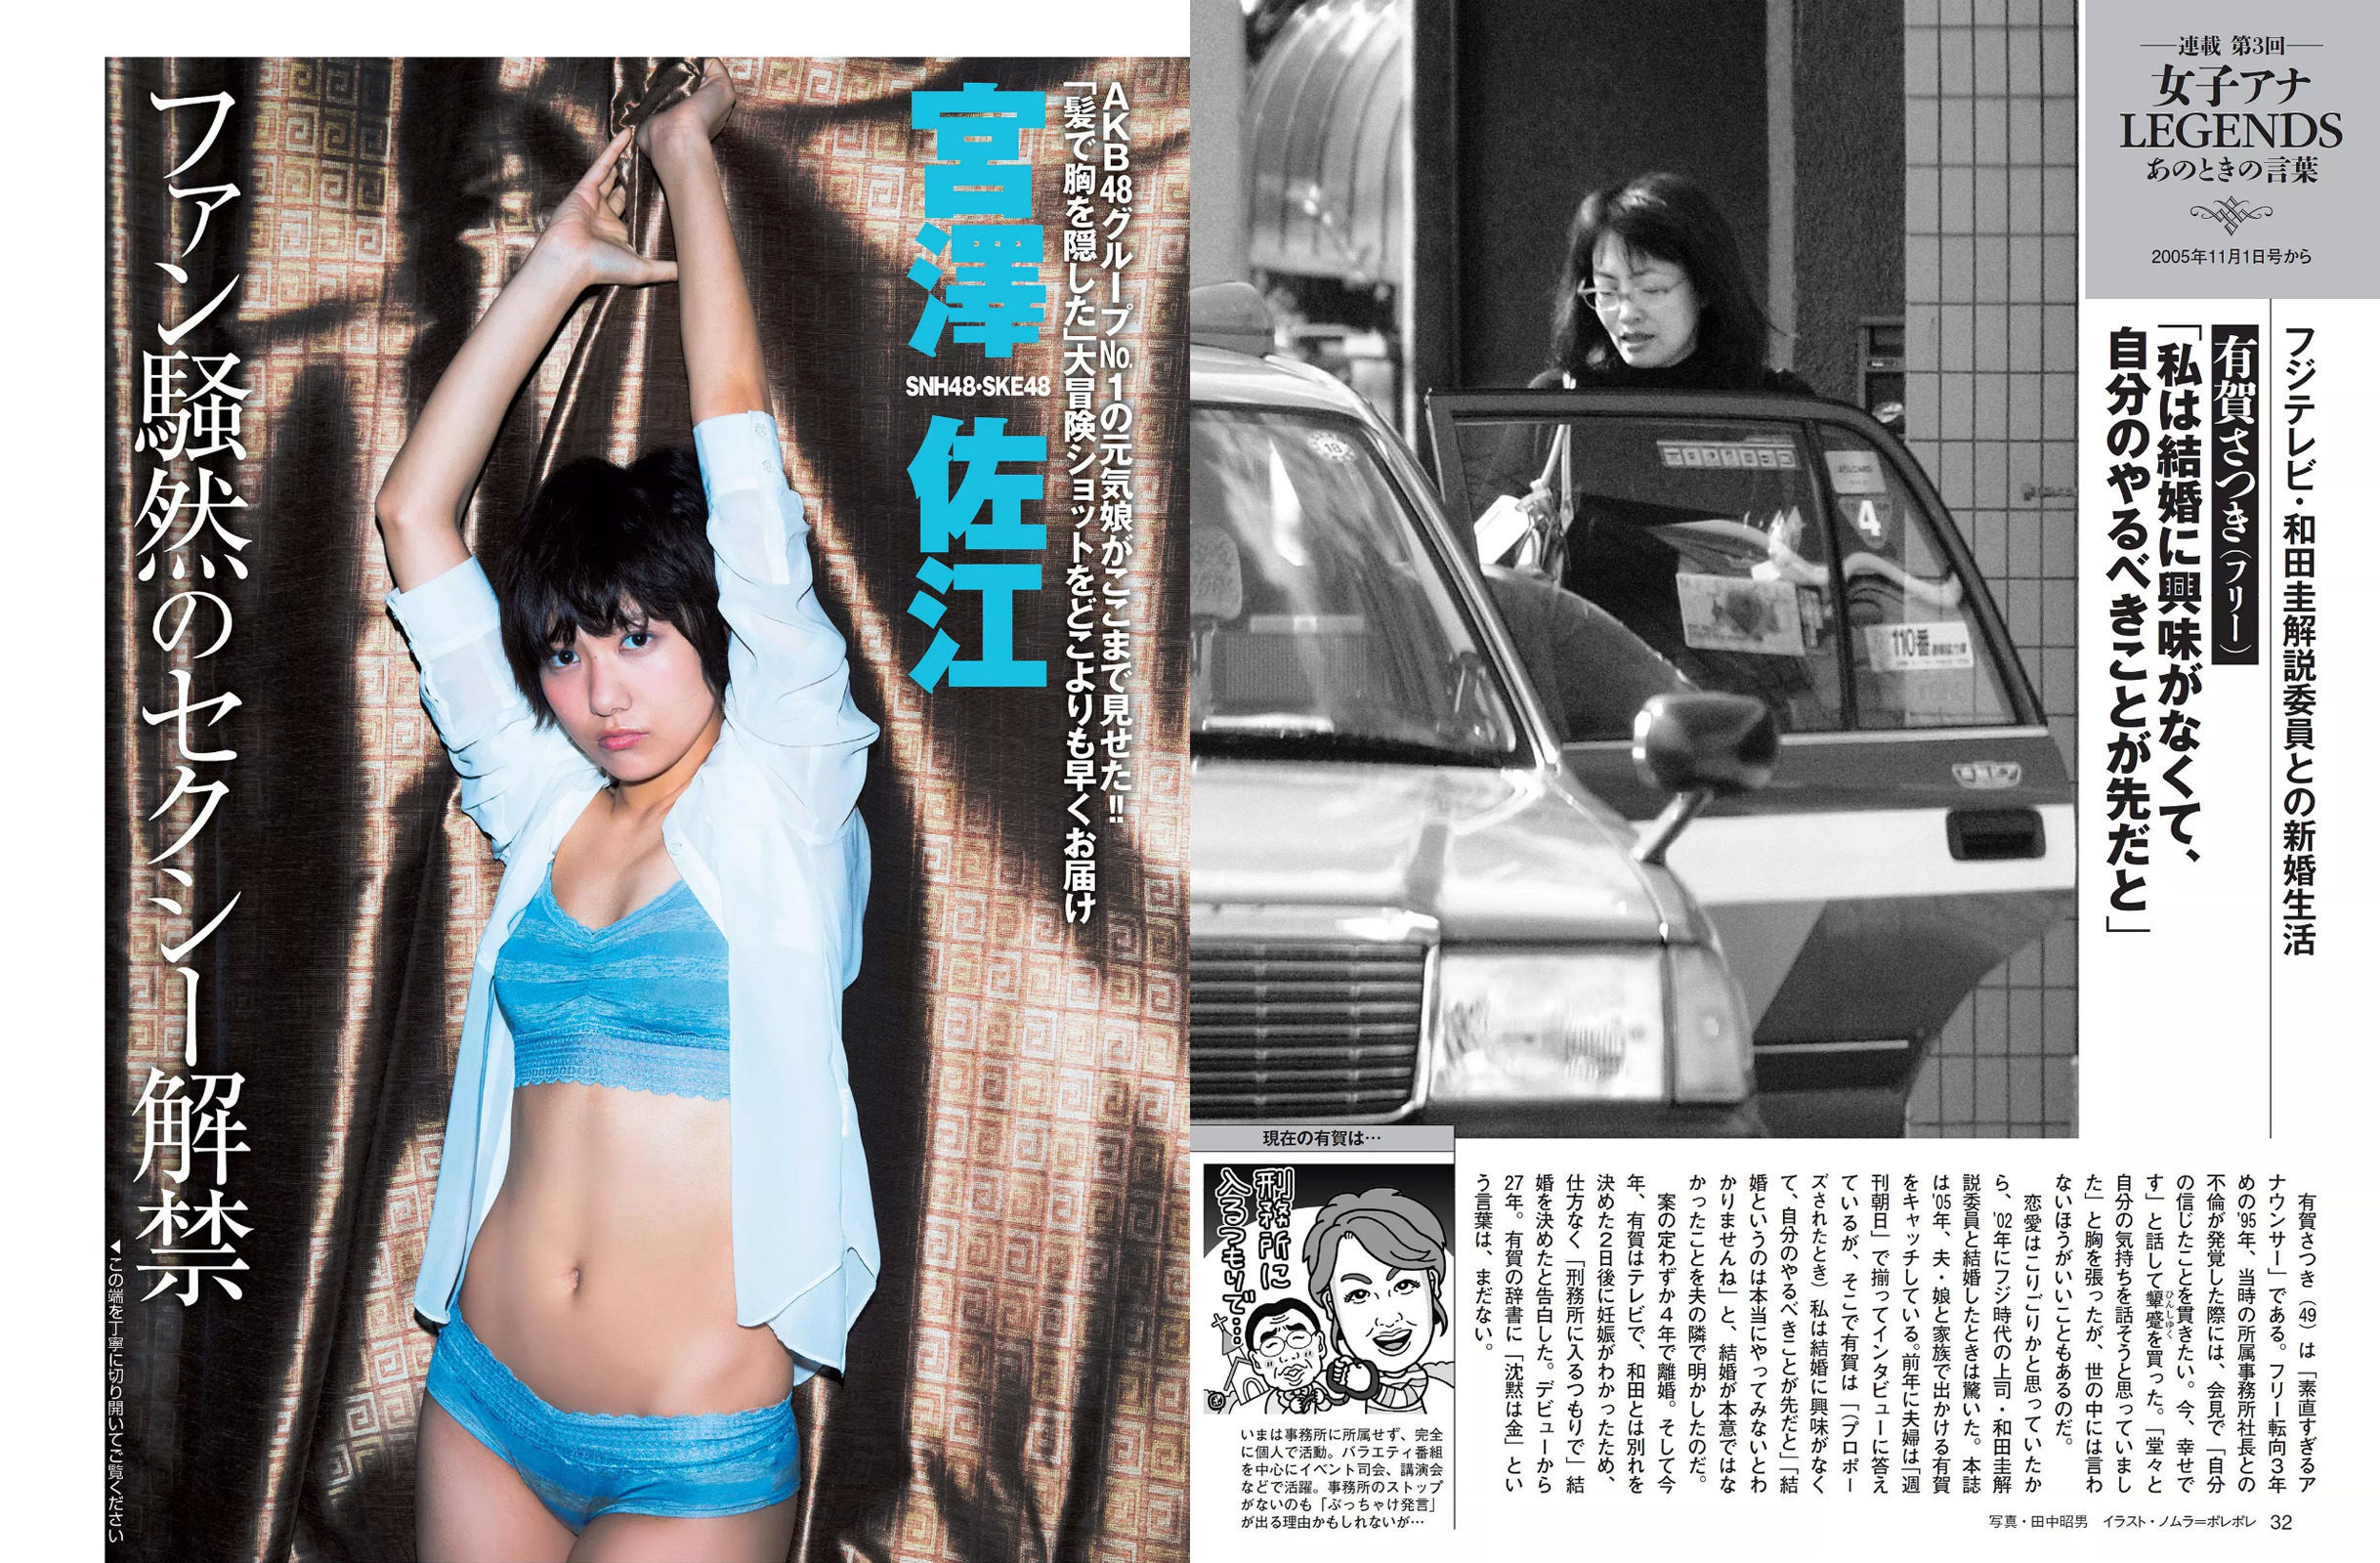 [FLASH]杂志:宫泽佐江高品质私家拍摄作品在线浏览(15P)